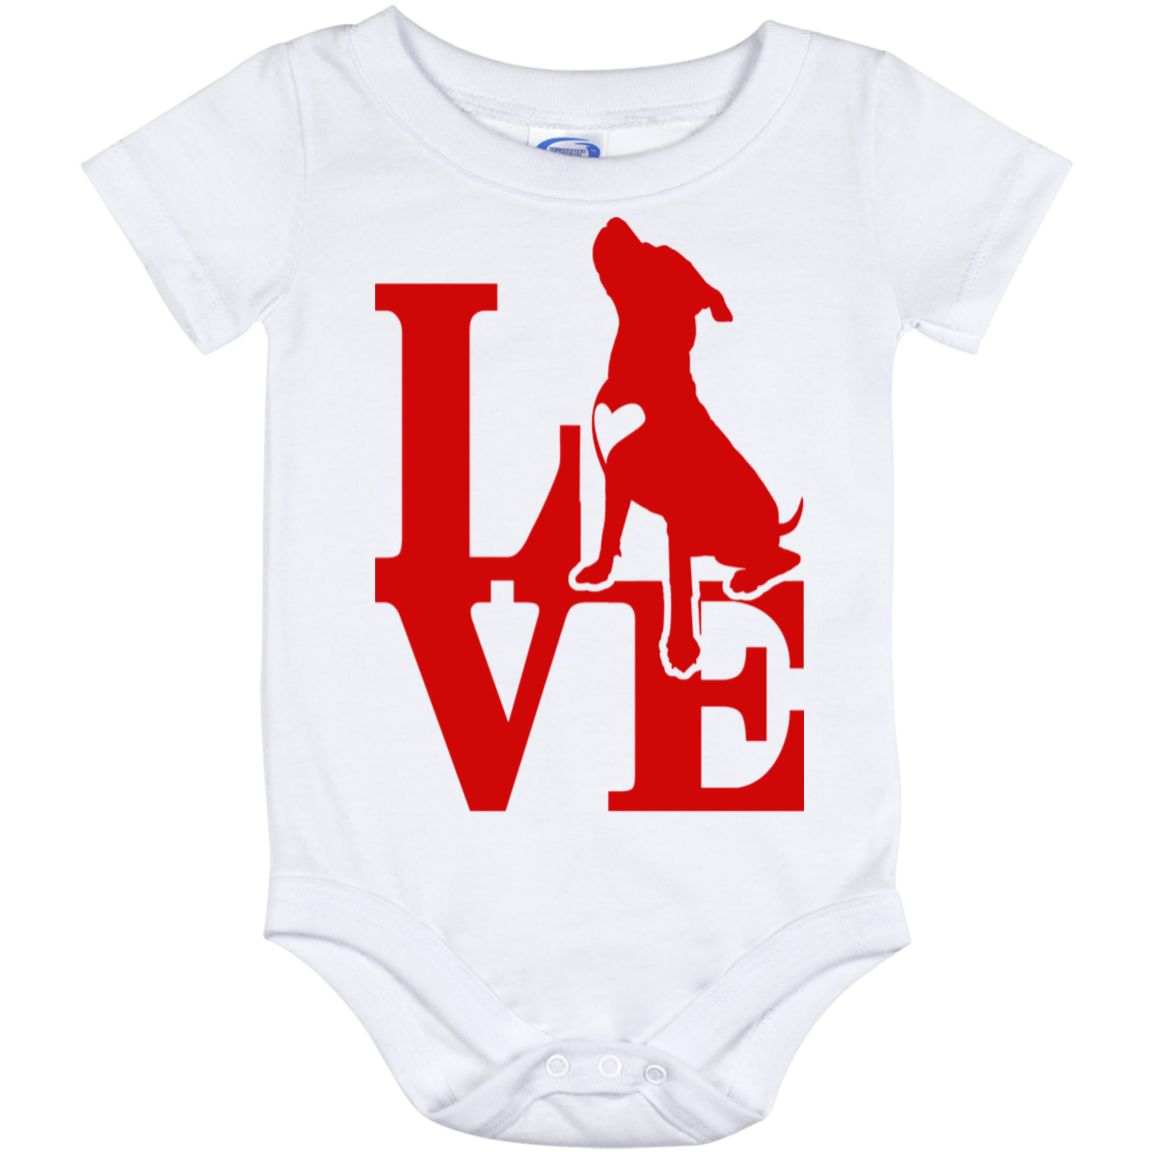 ArtichokeUSA Custom Design. Pitbull Love. Baby Onesie 12 Month